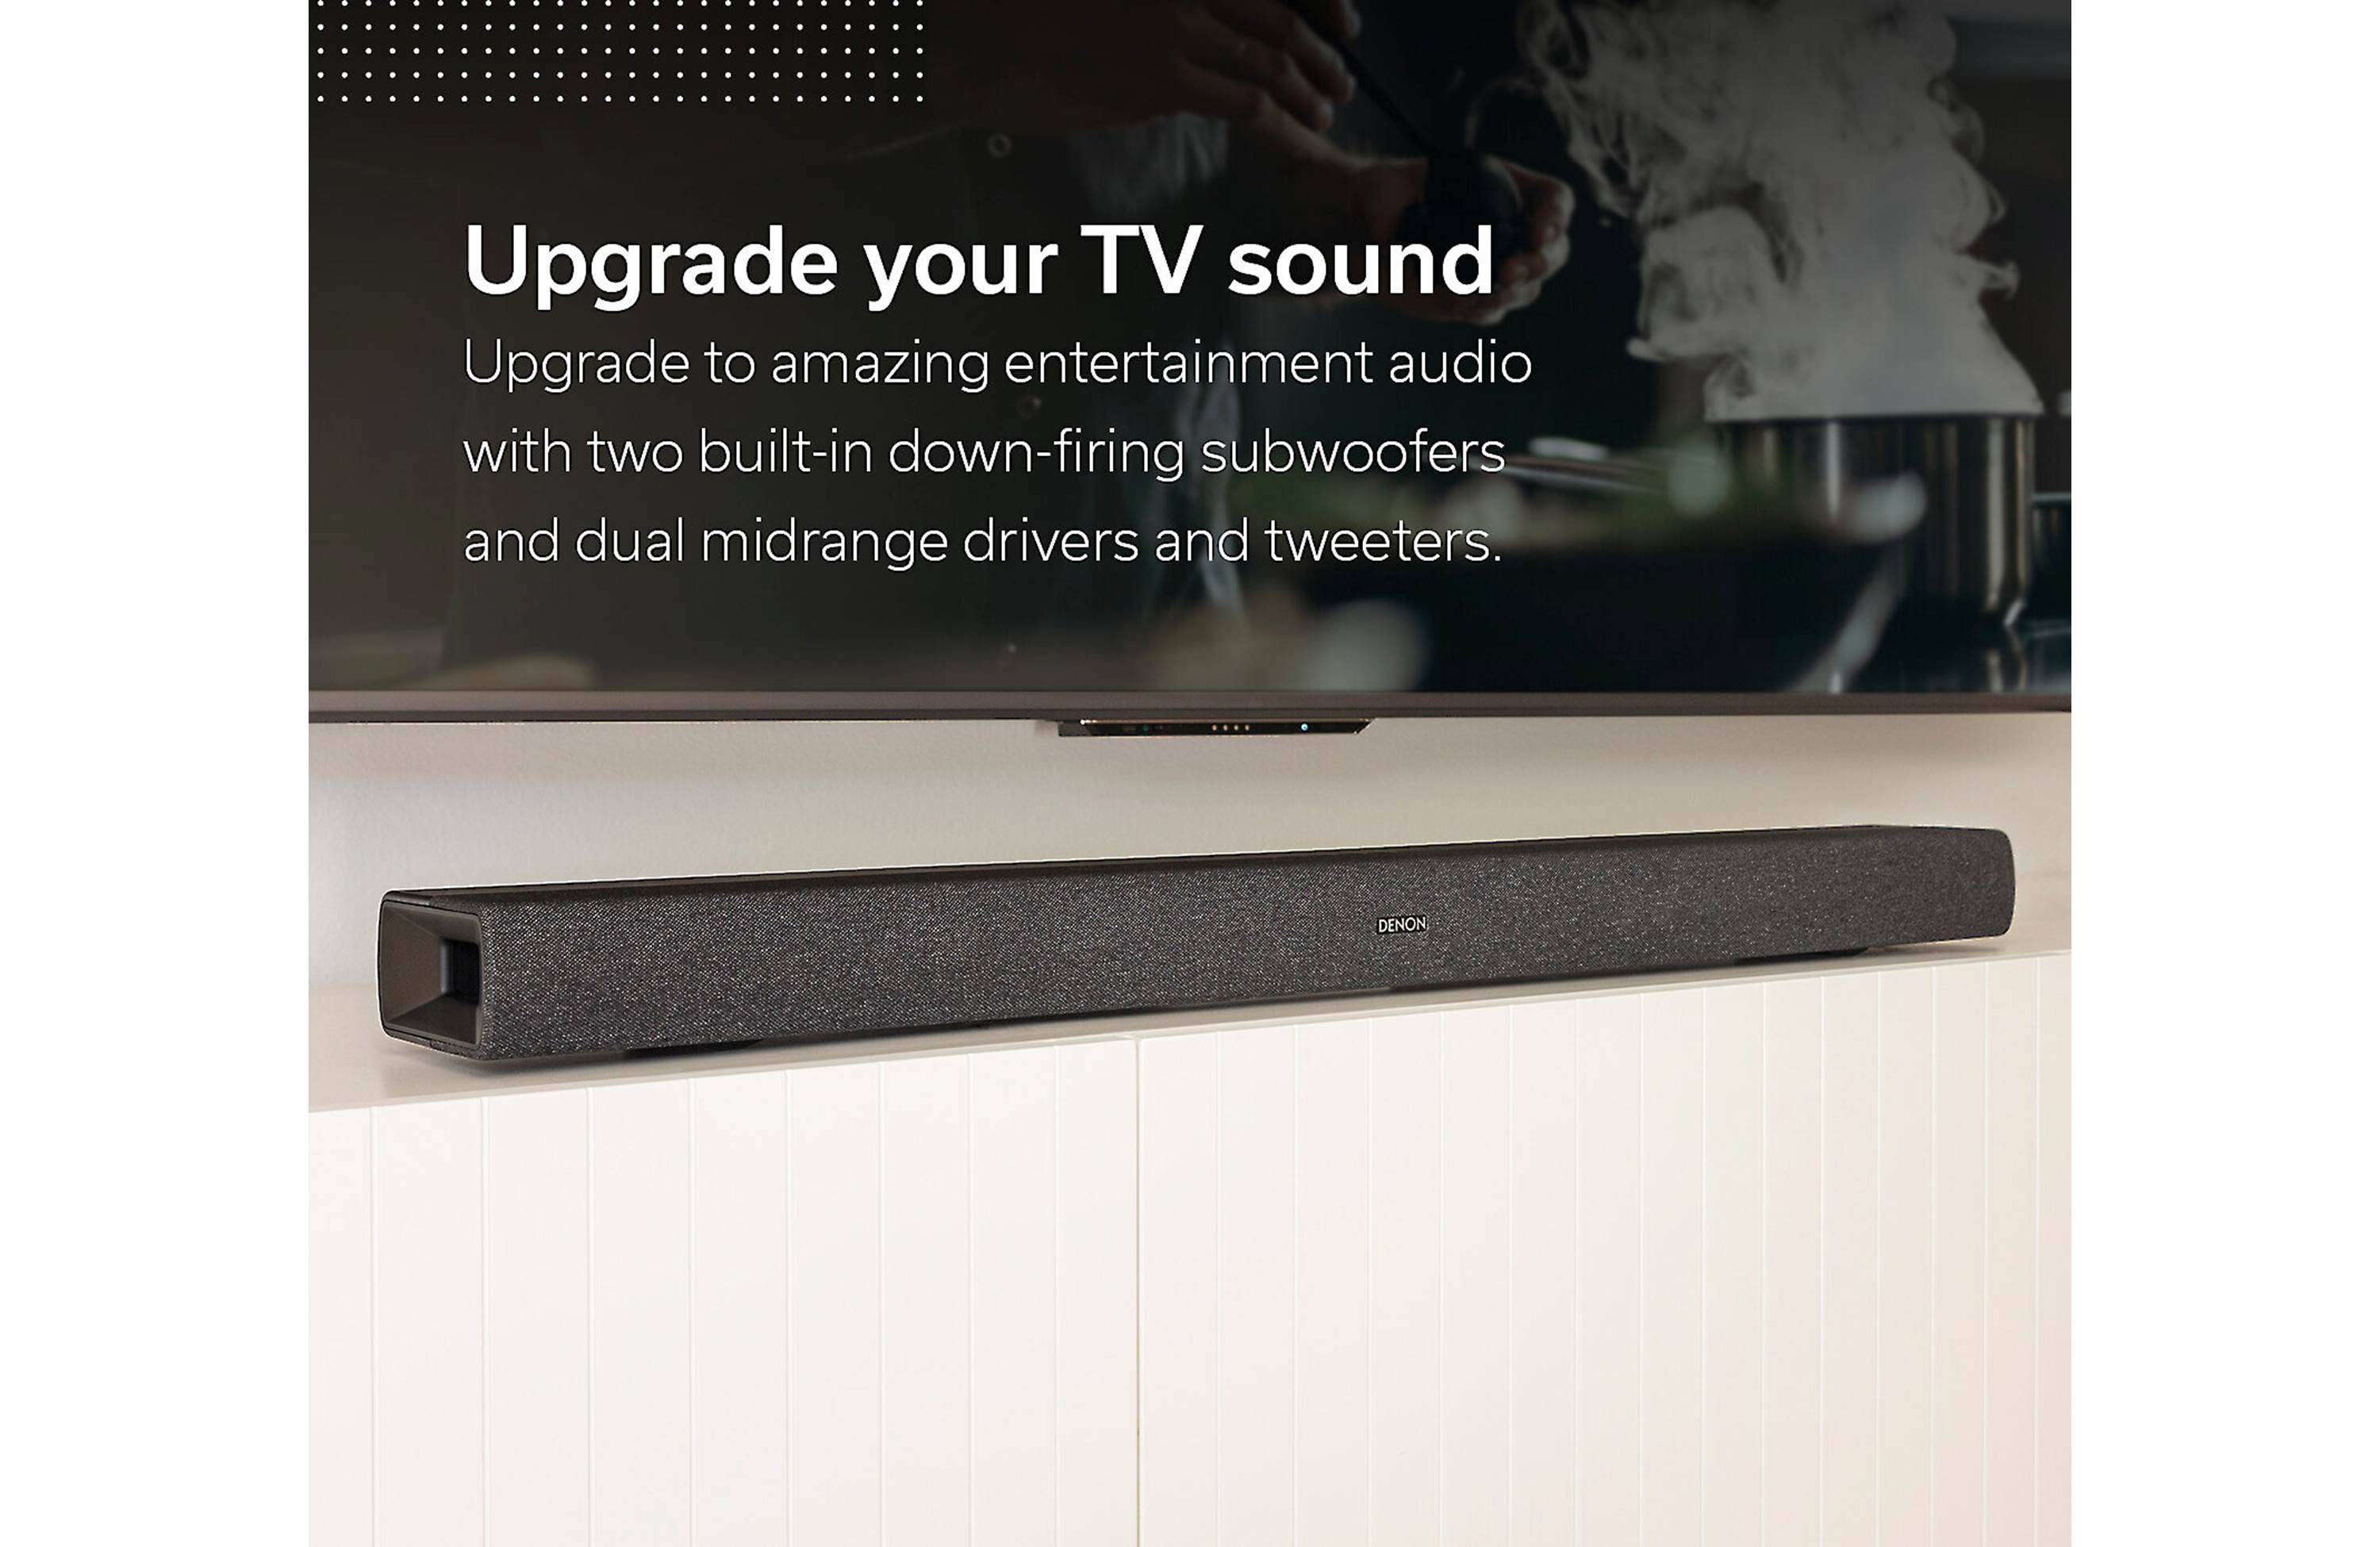 Upgrade your TV sound